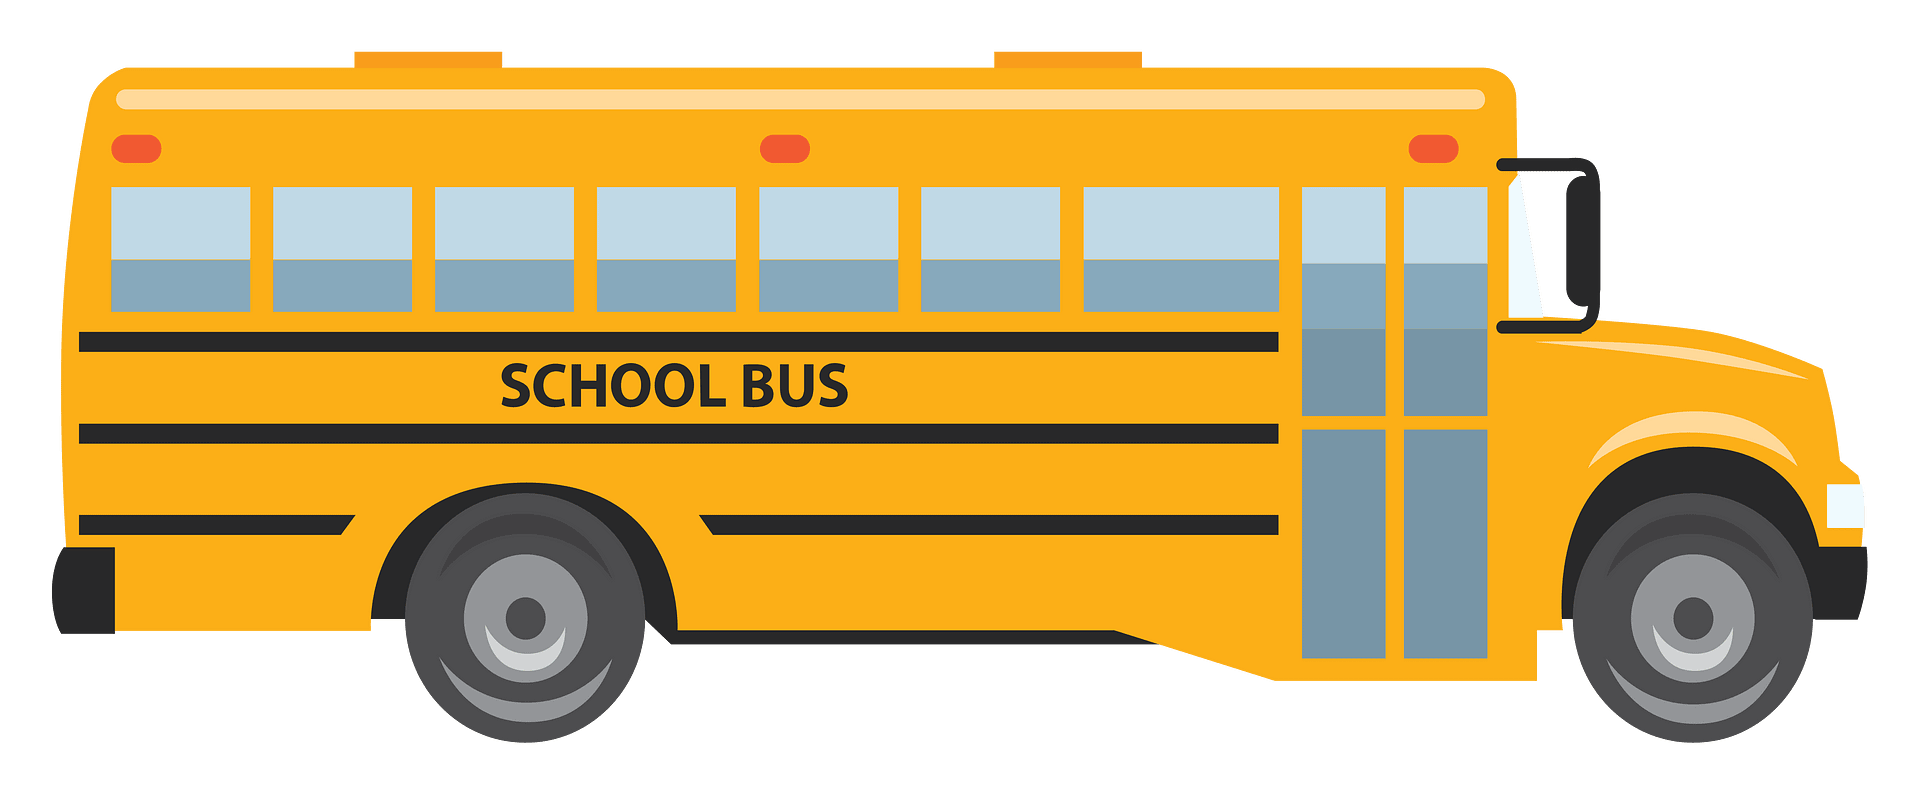 bus information